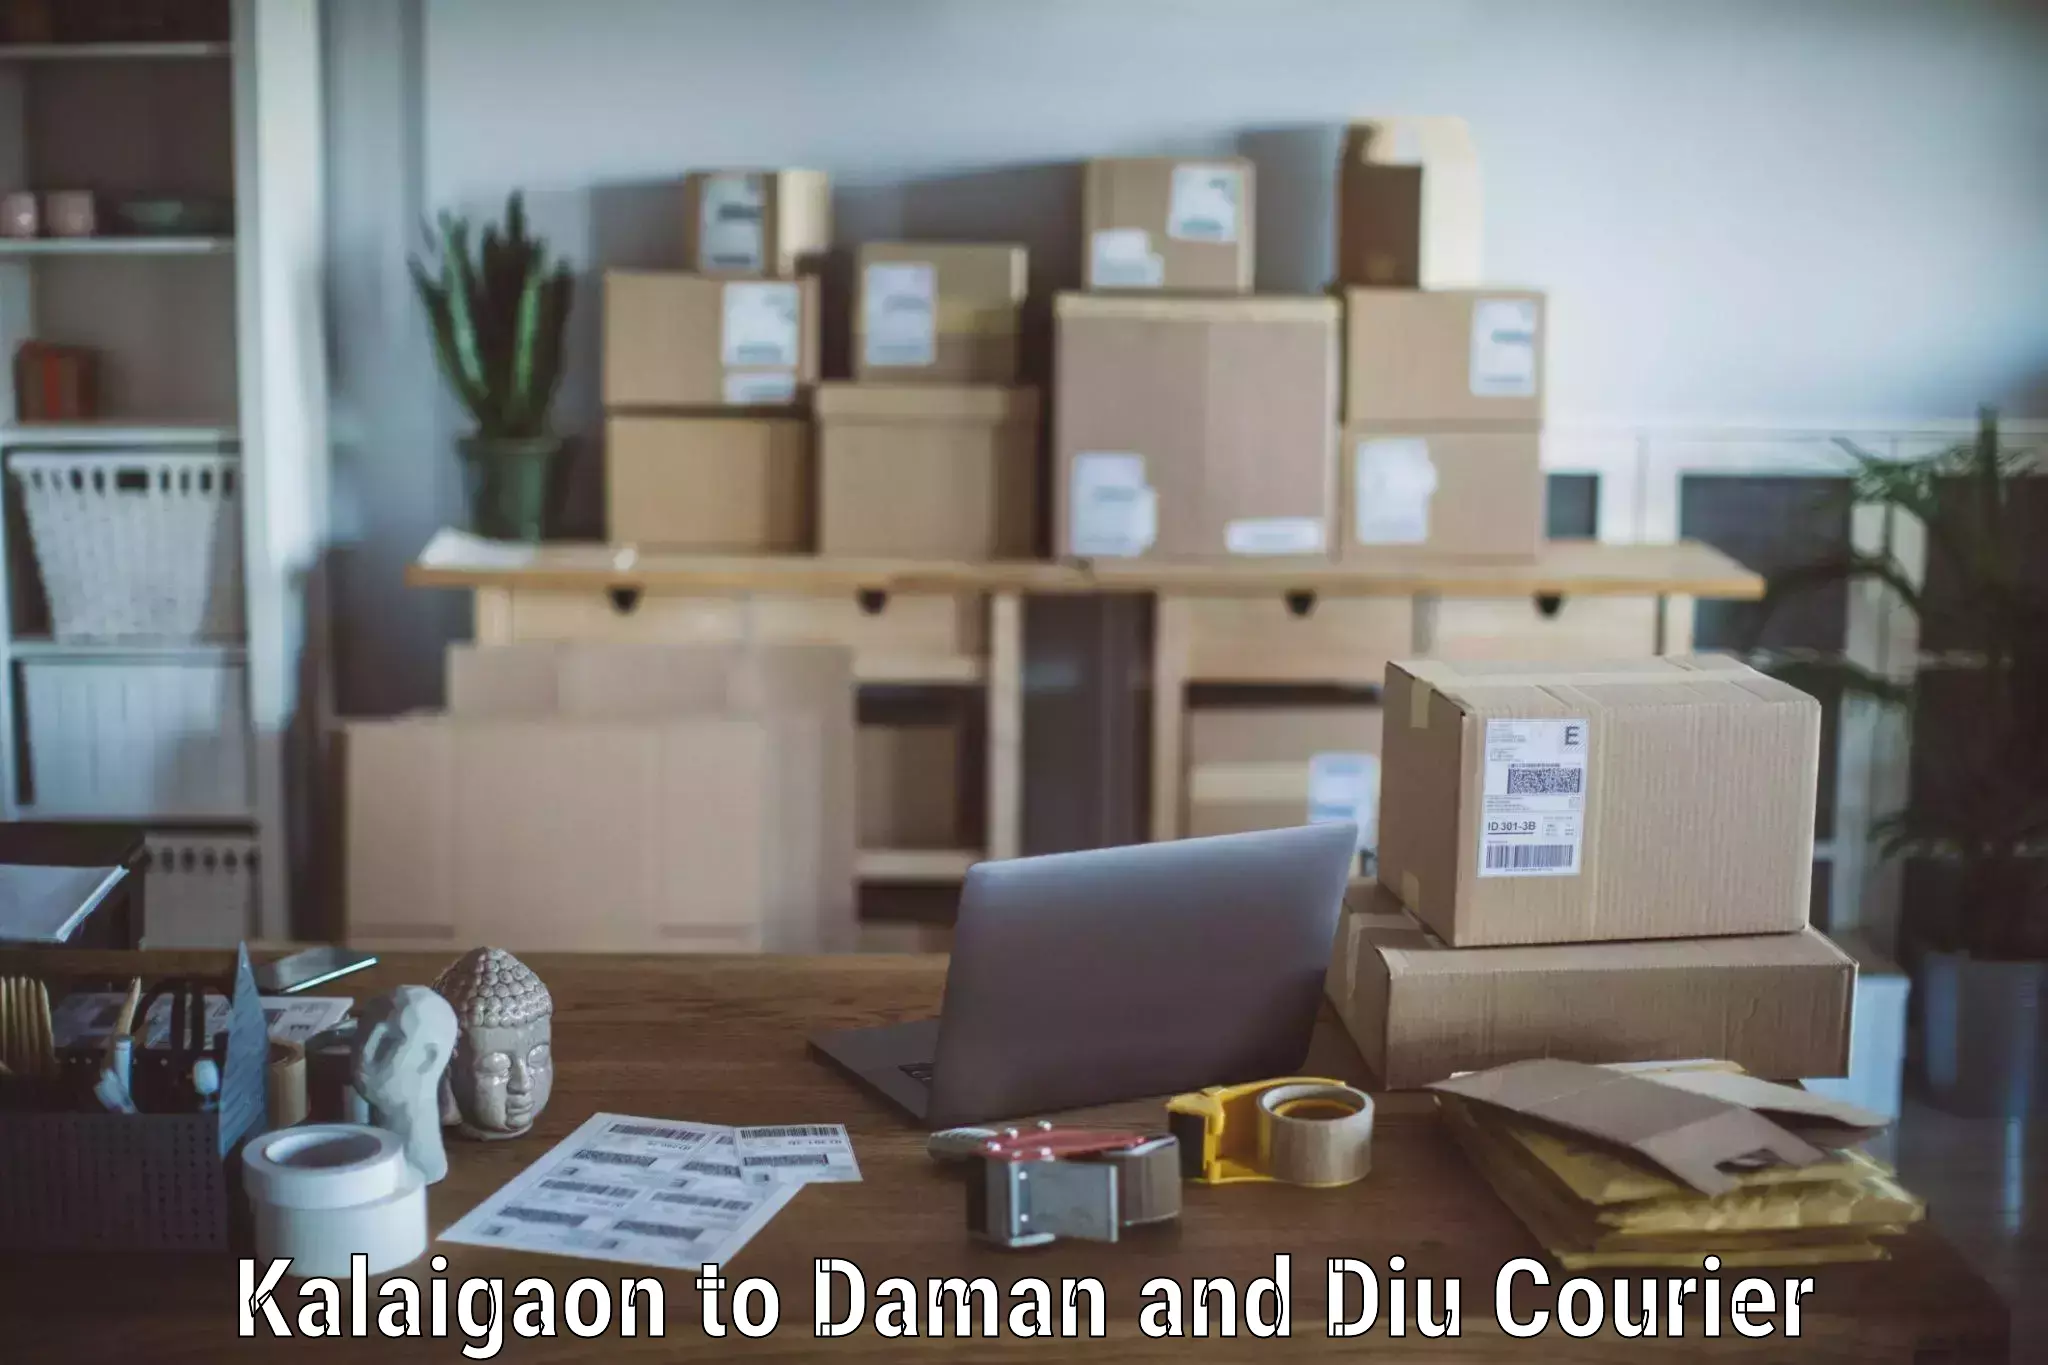 Professional movers and packers Kalaigaon to Daman and Diu